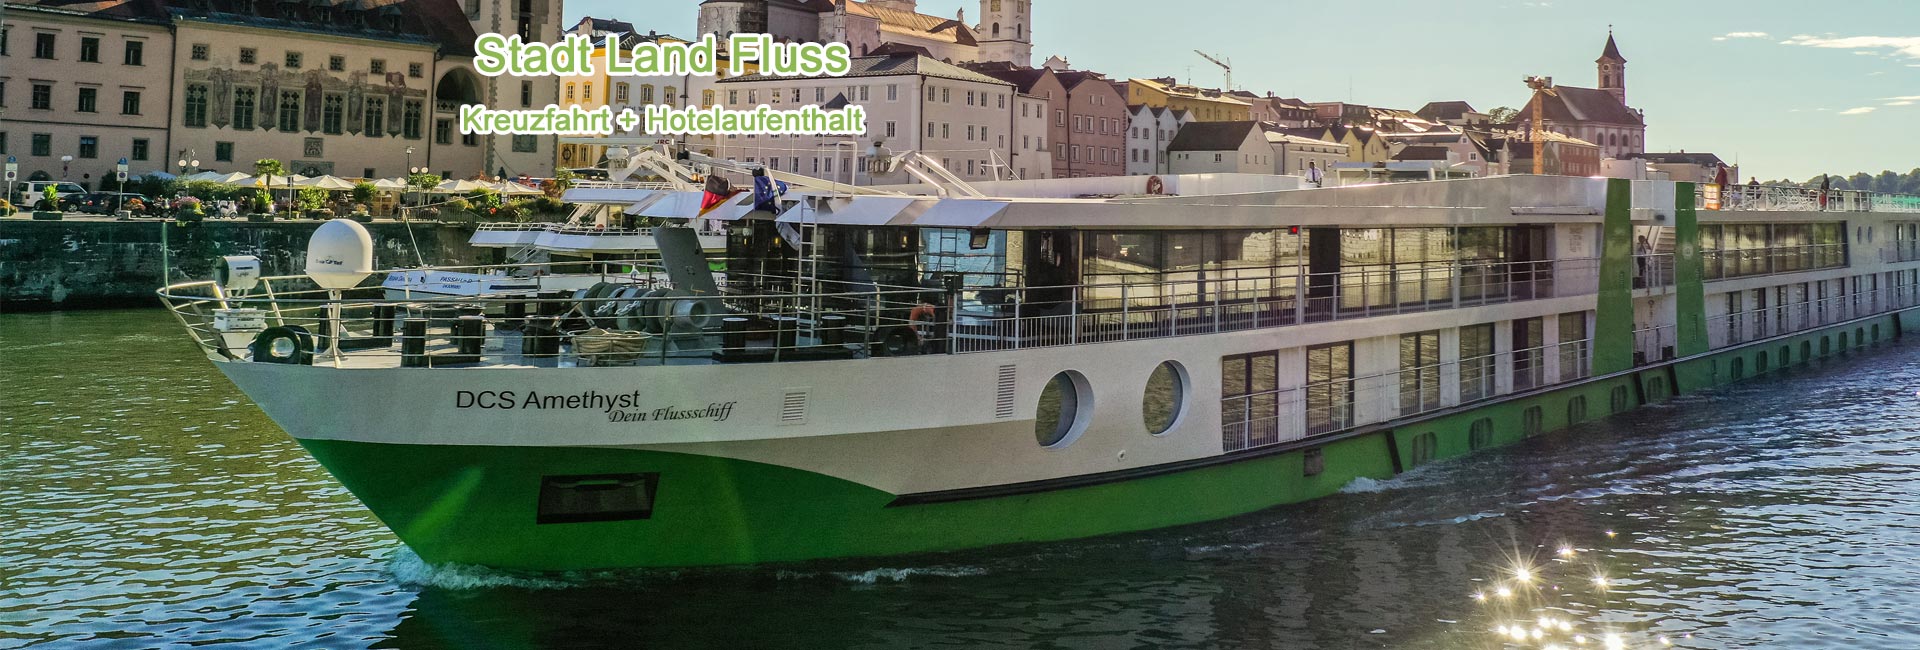 9 Tage Reise Passau und Donaukreuzfahrt